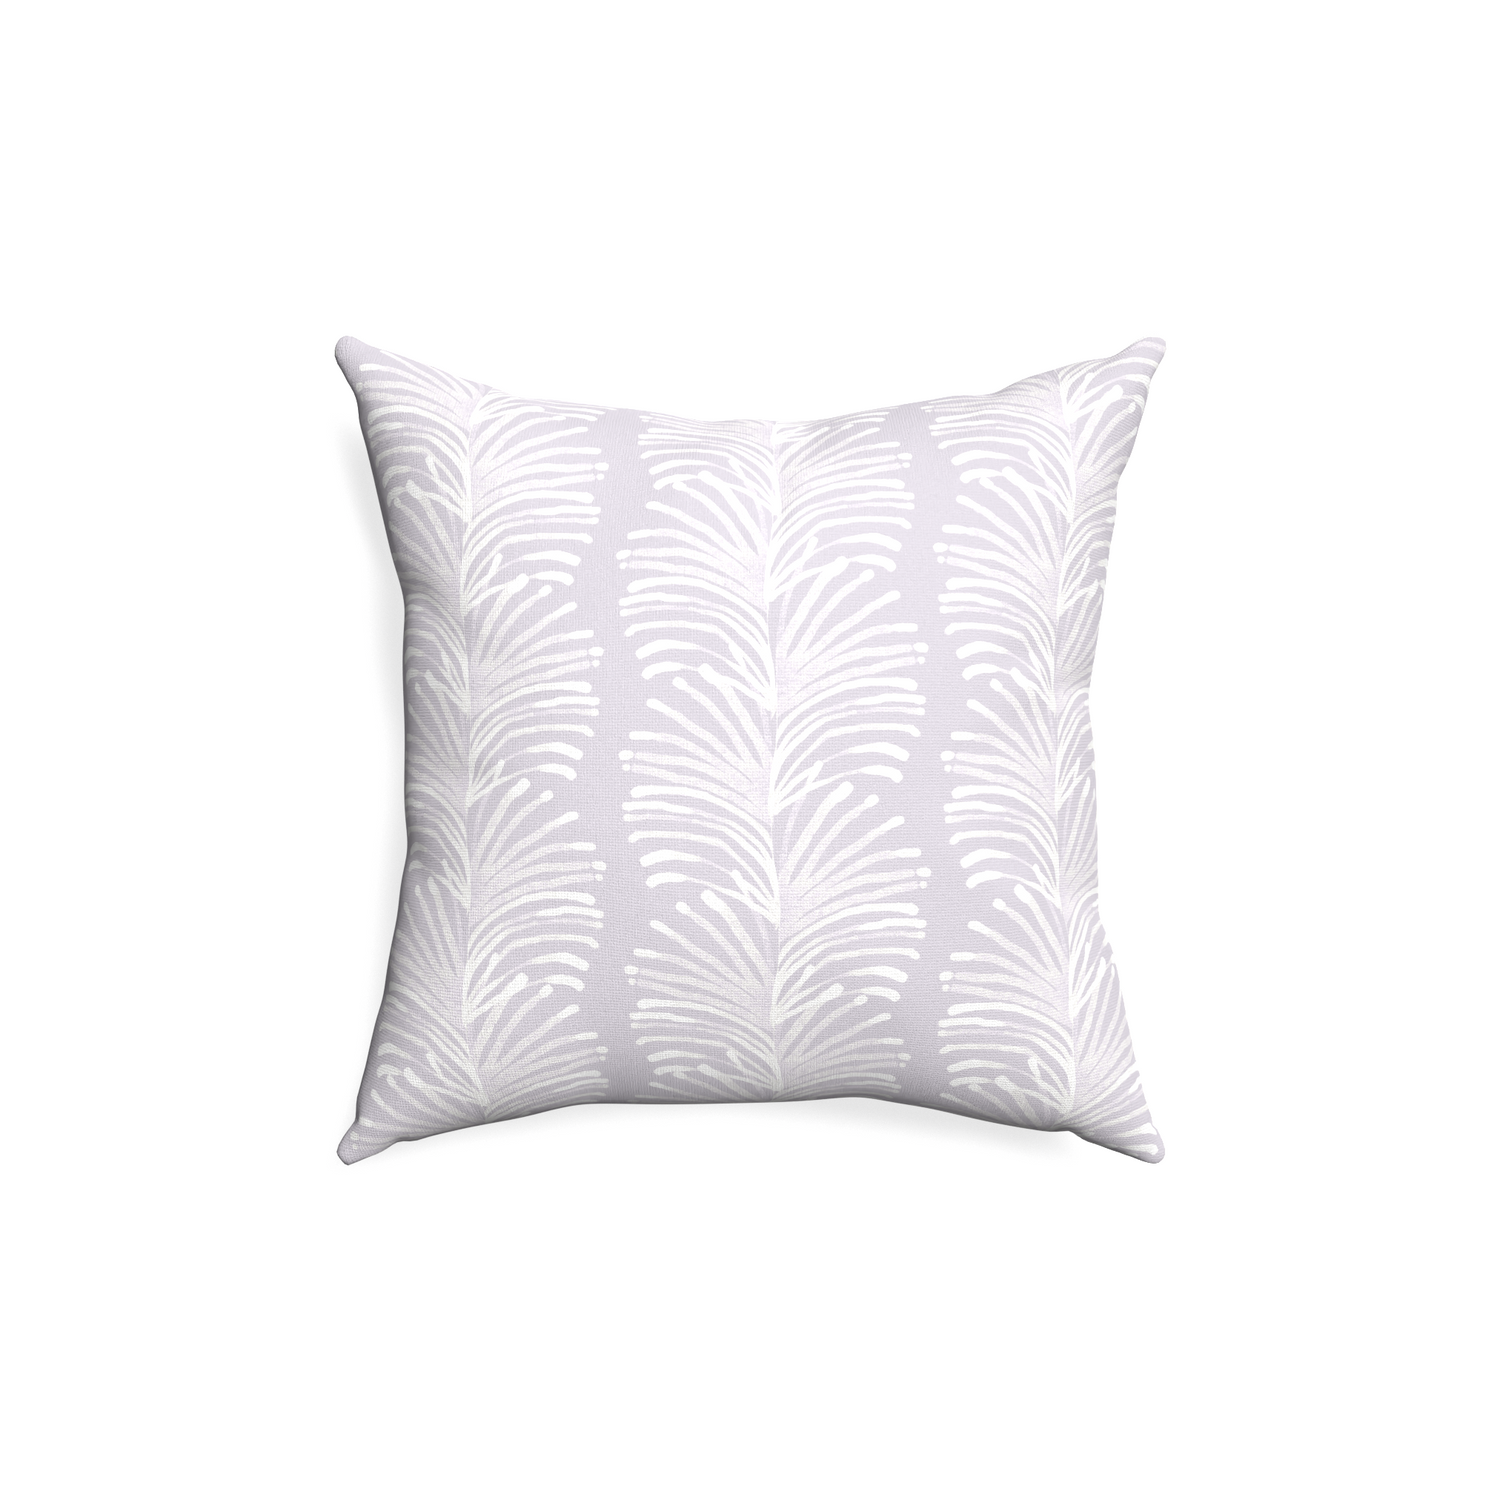 18-square emma lavender custom lavender botanical stripepillow with none on white background